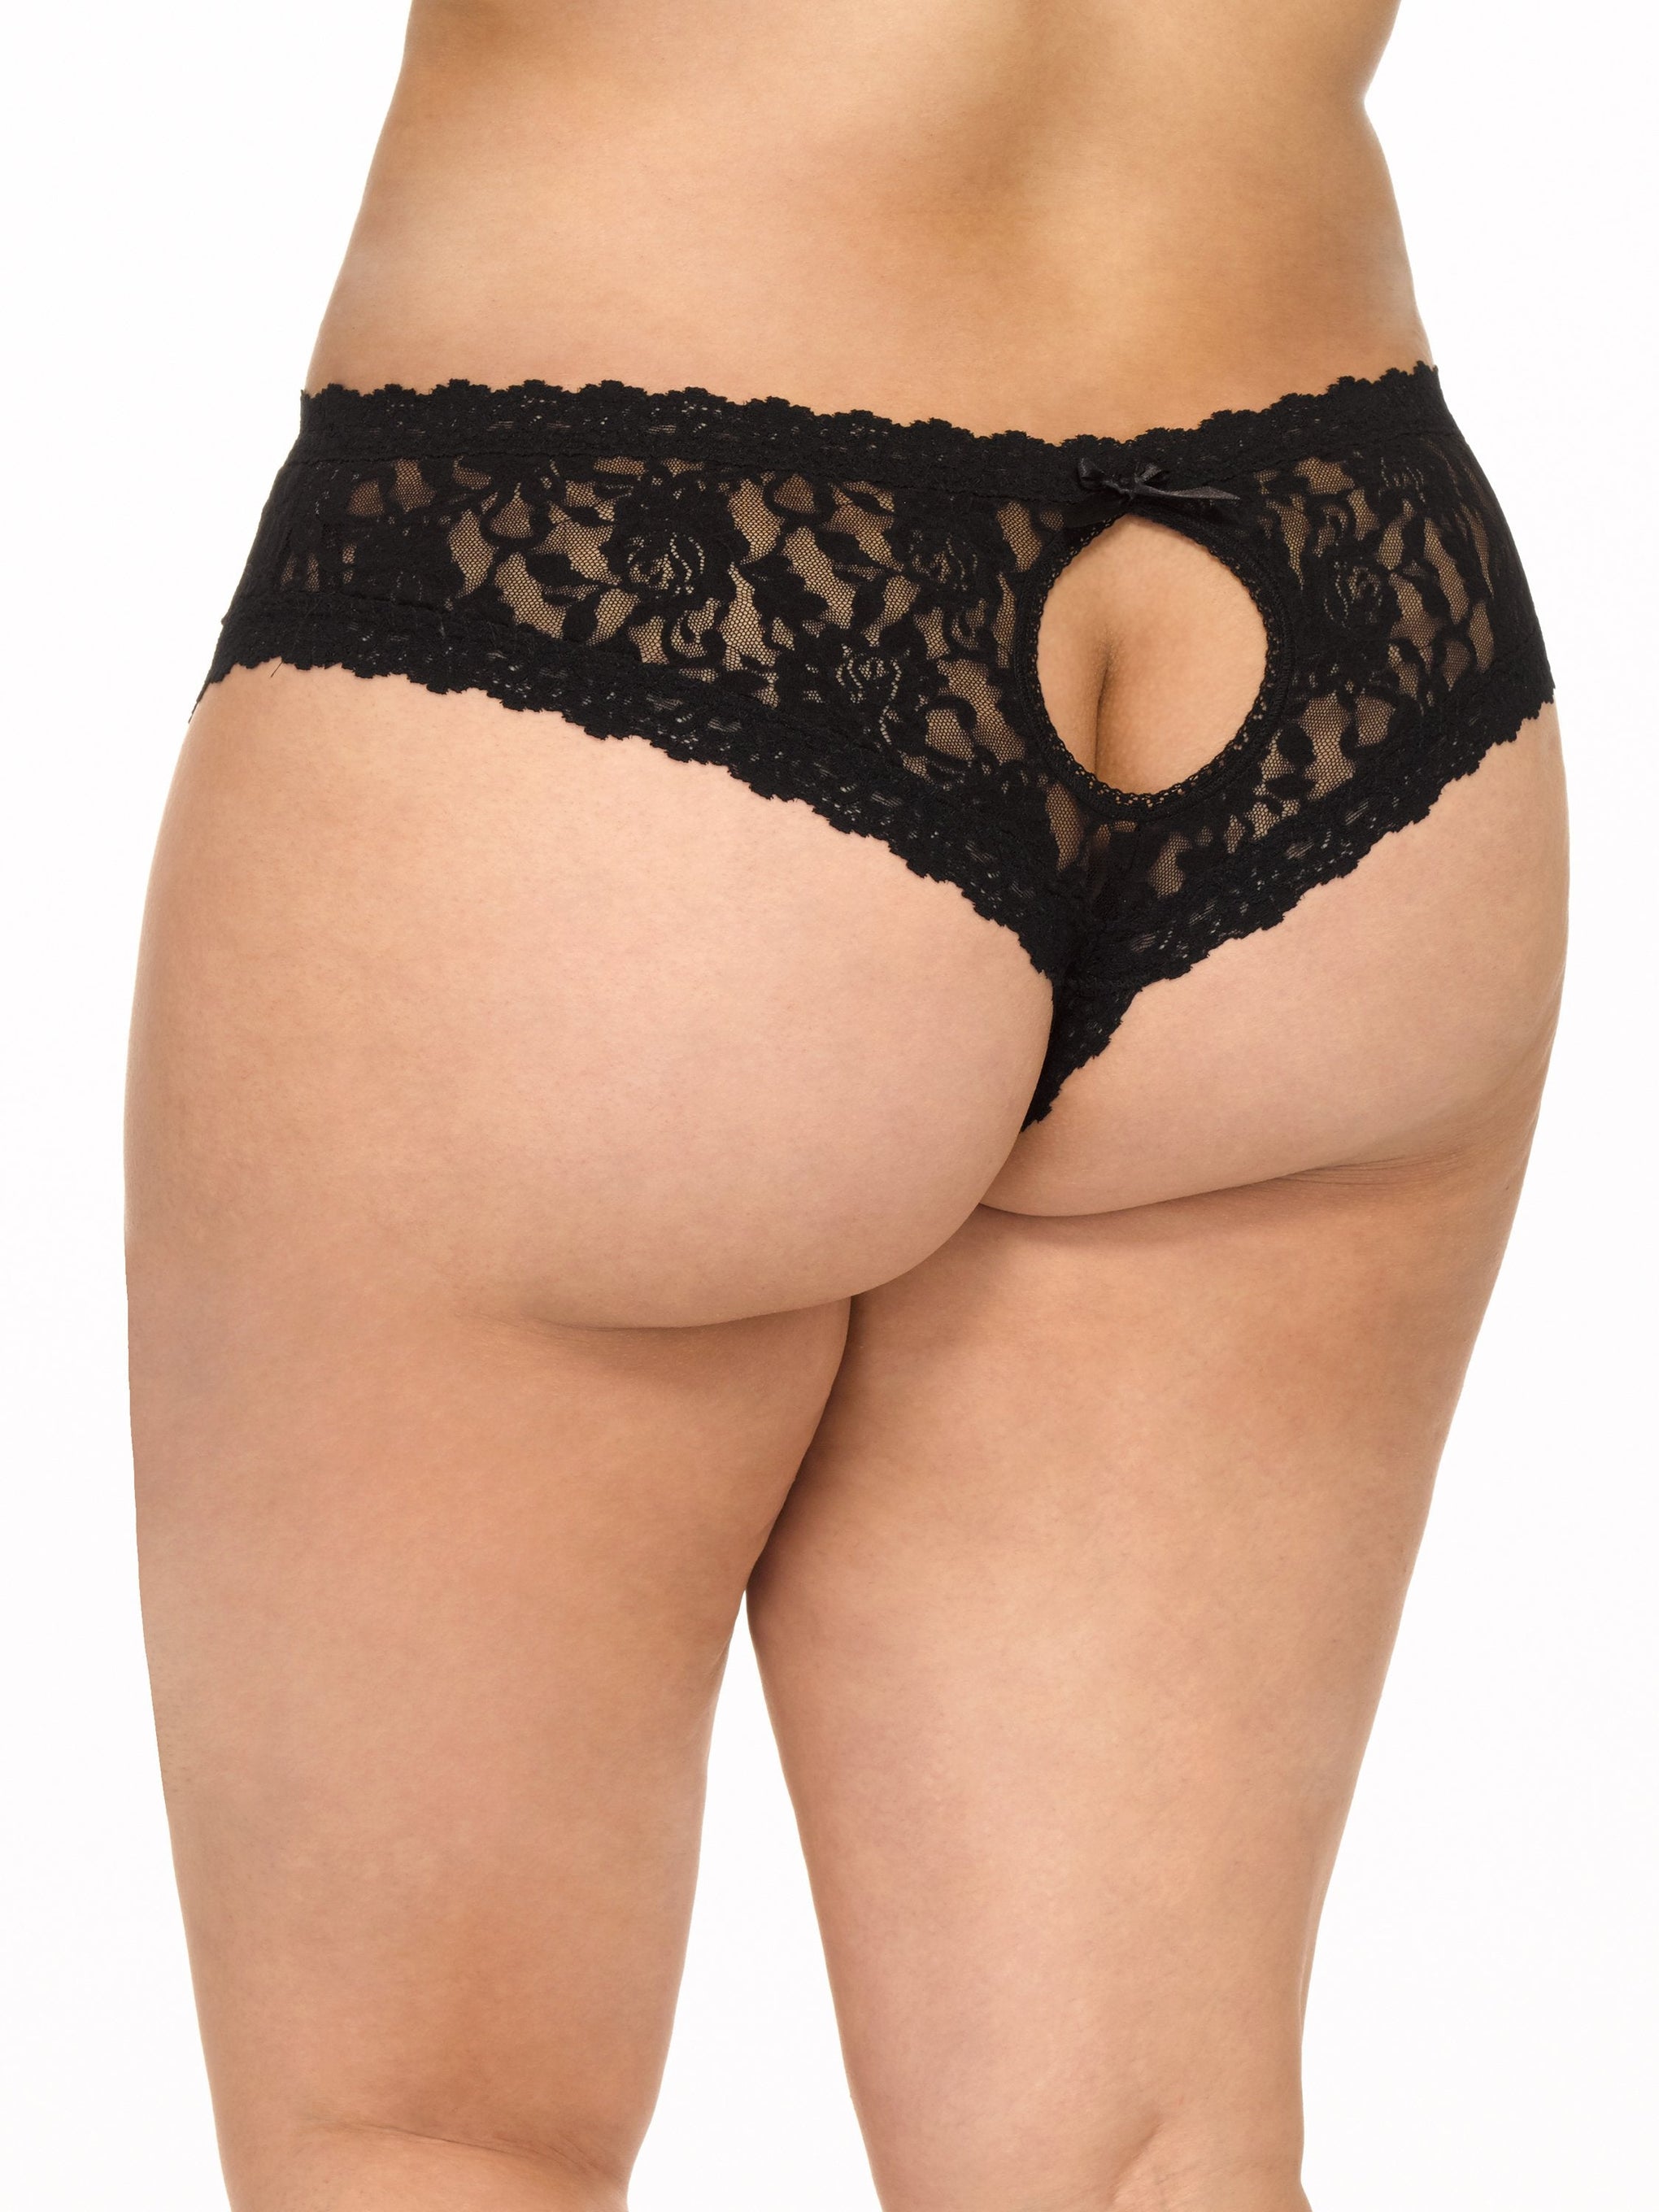 Plus Size Erotic Lingerie For Women Lace Open Bra Crotchless